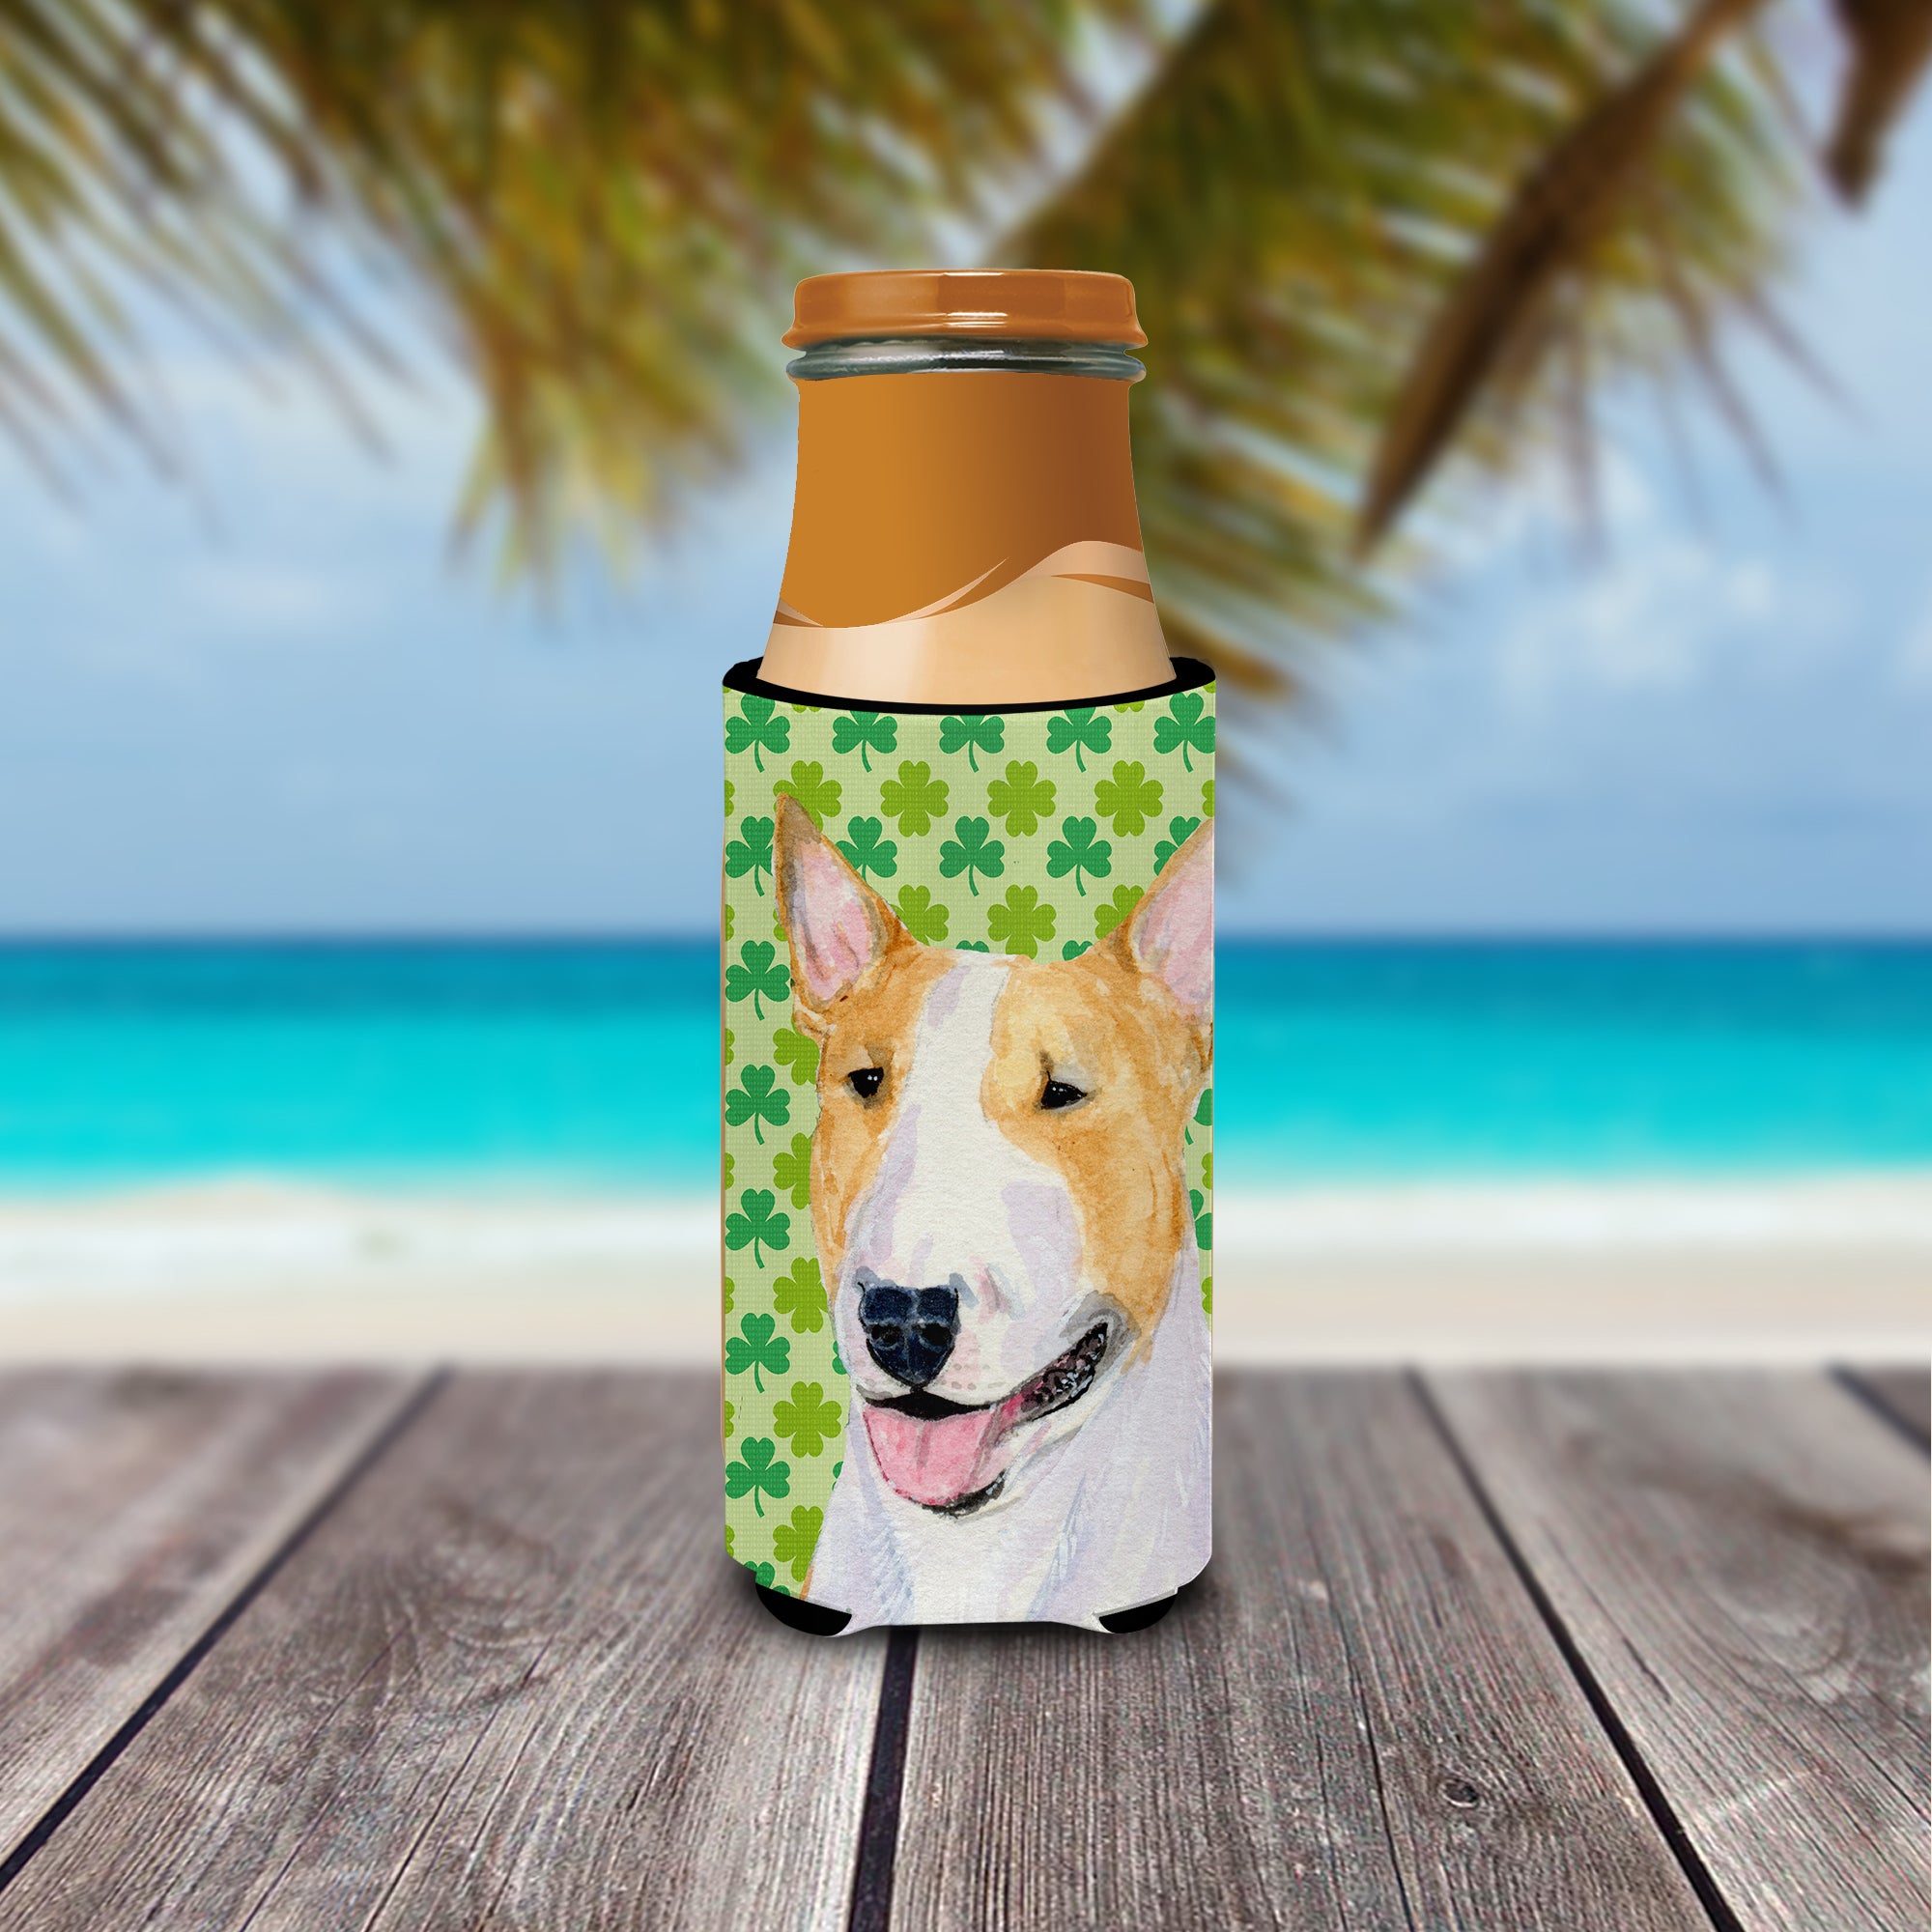 Bull Terrier St. Patrick's Day Shamrock Portrait Ultra Beverage Insulators for slim cans SS4427MUK